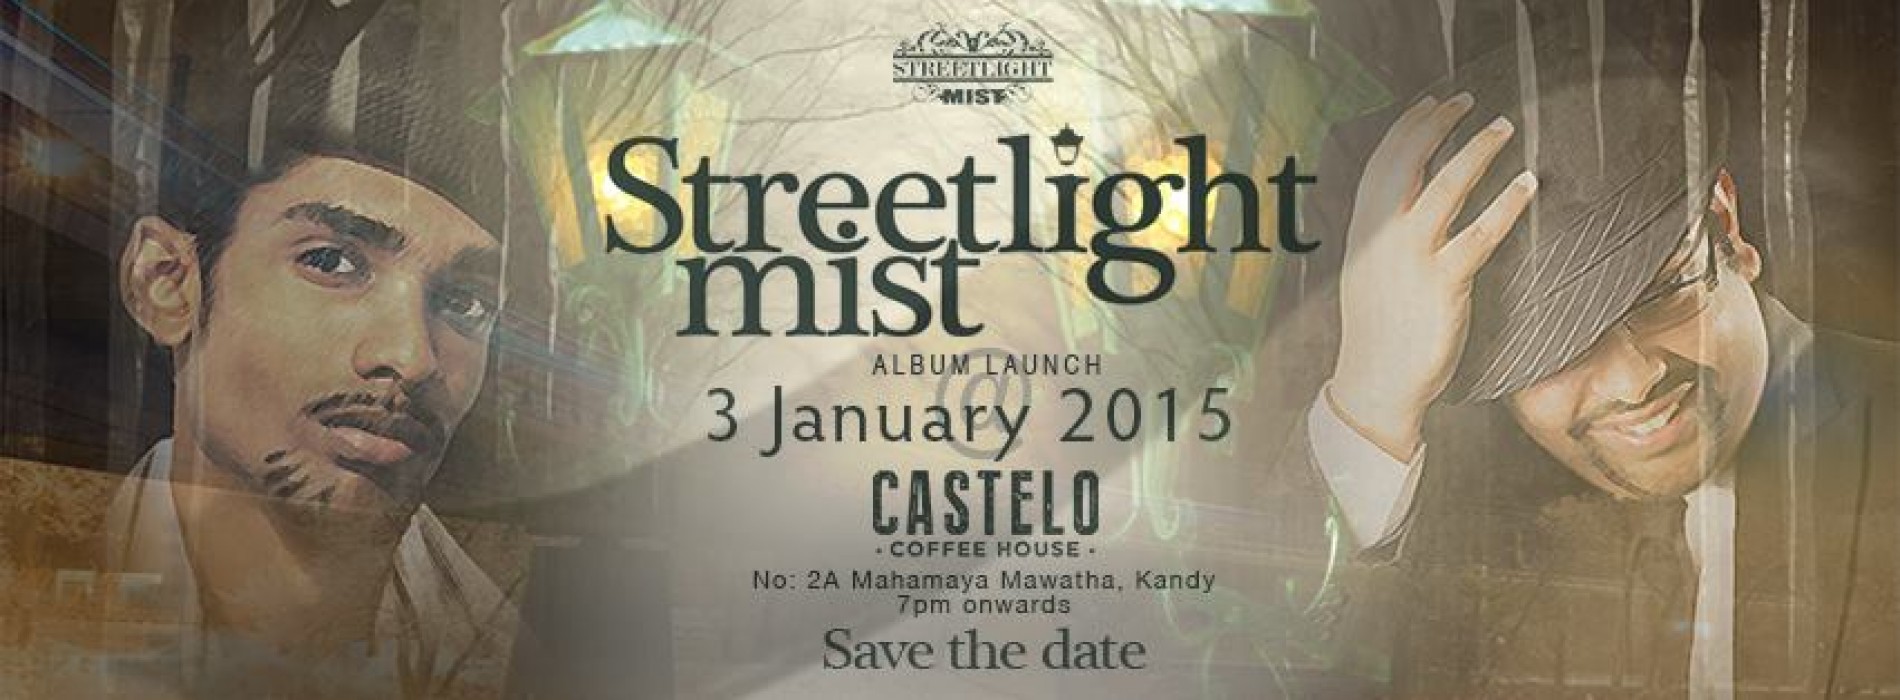 StreetLight Mist Announces Their Album Launch Deets